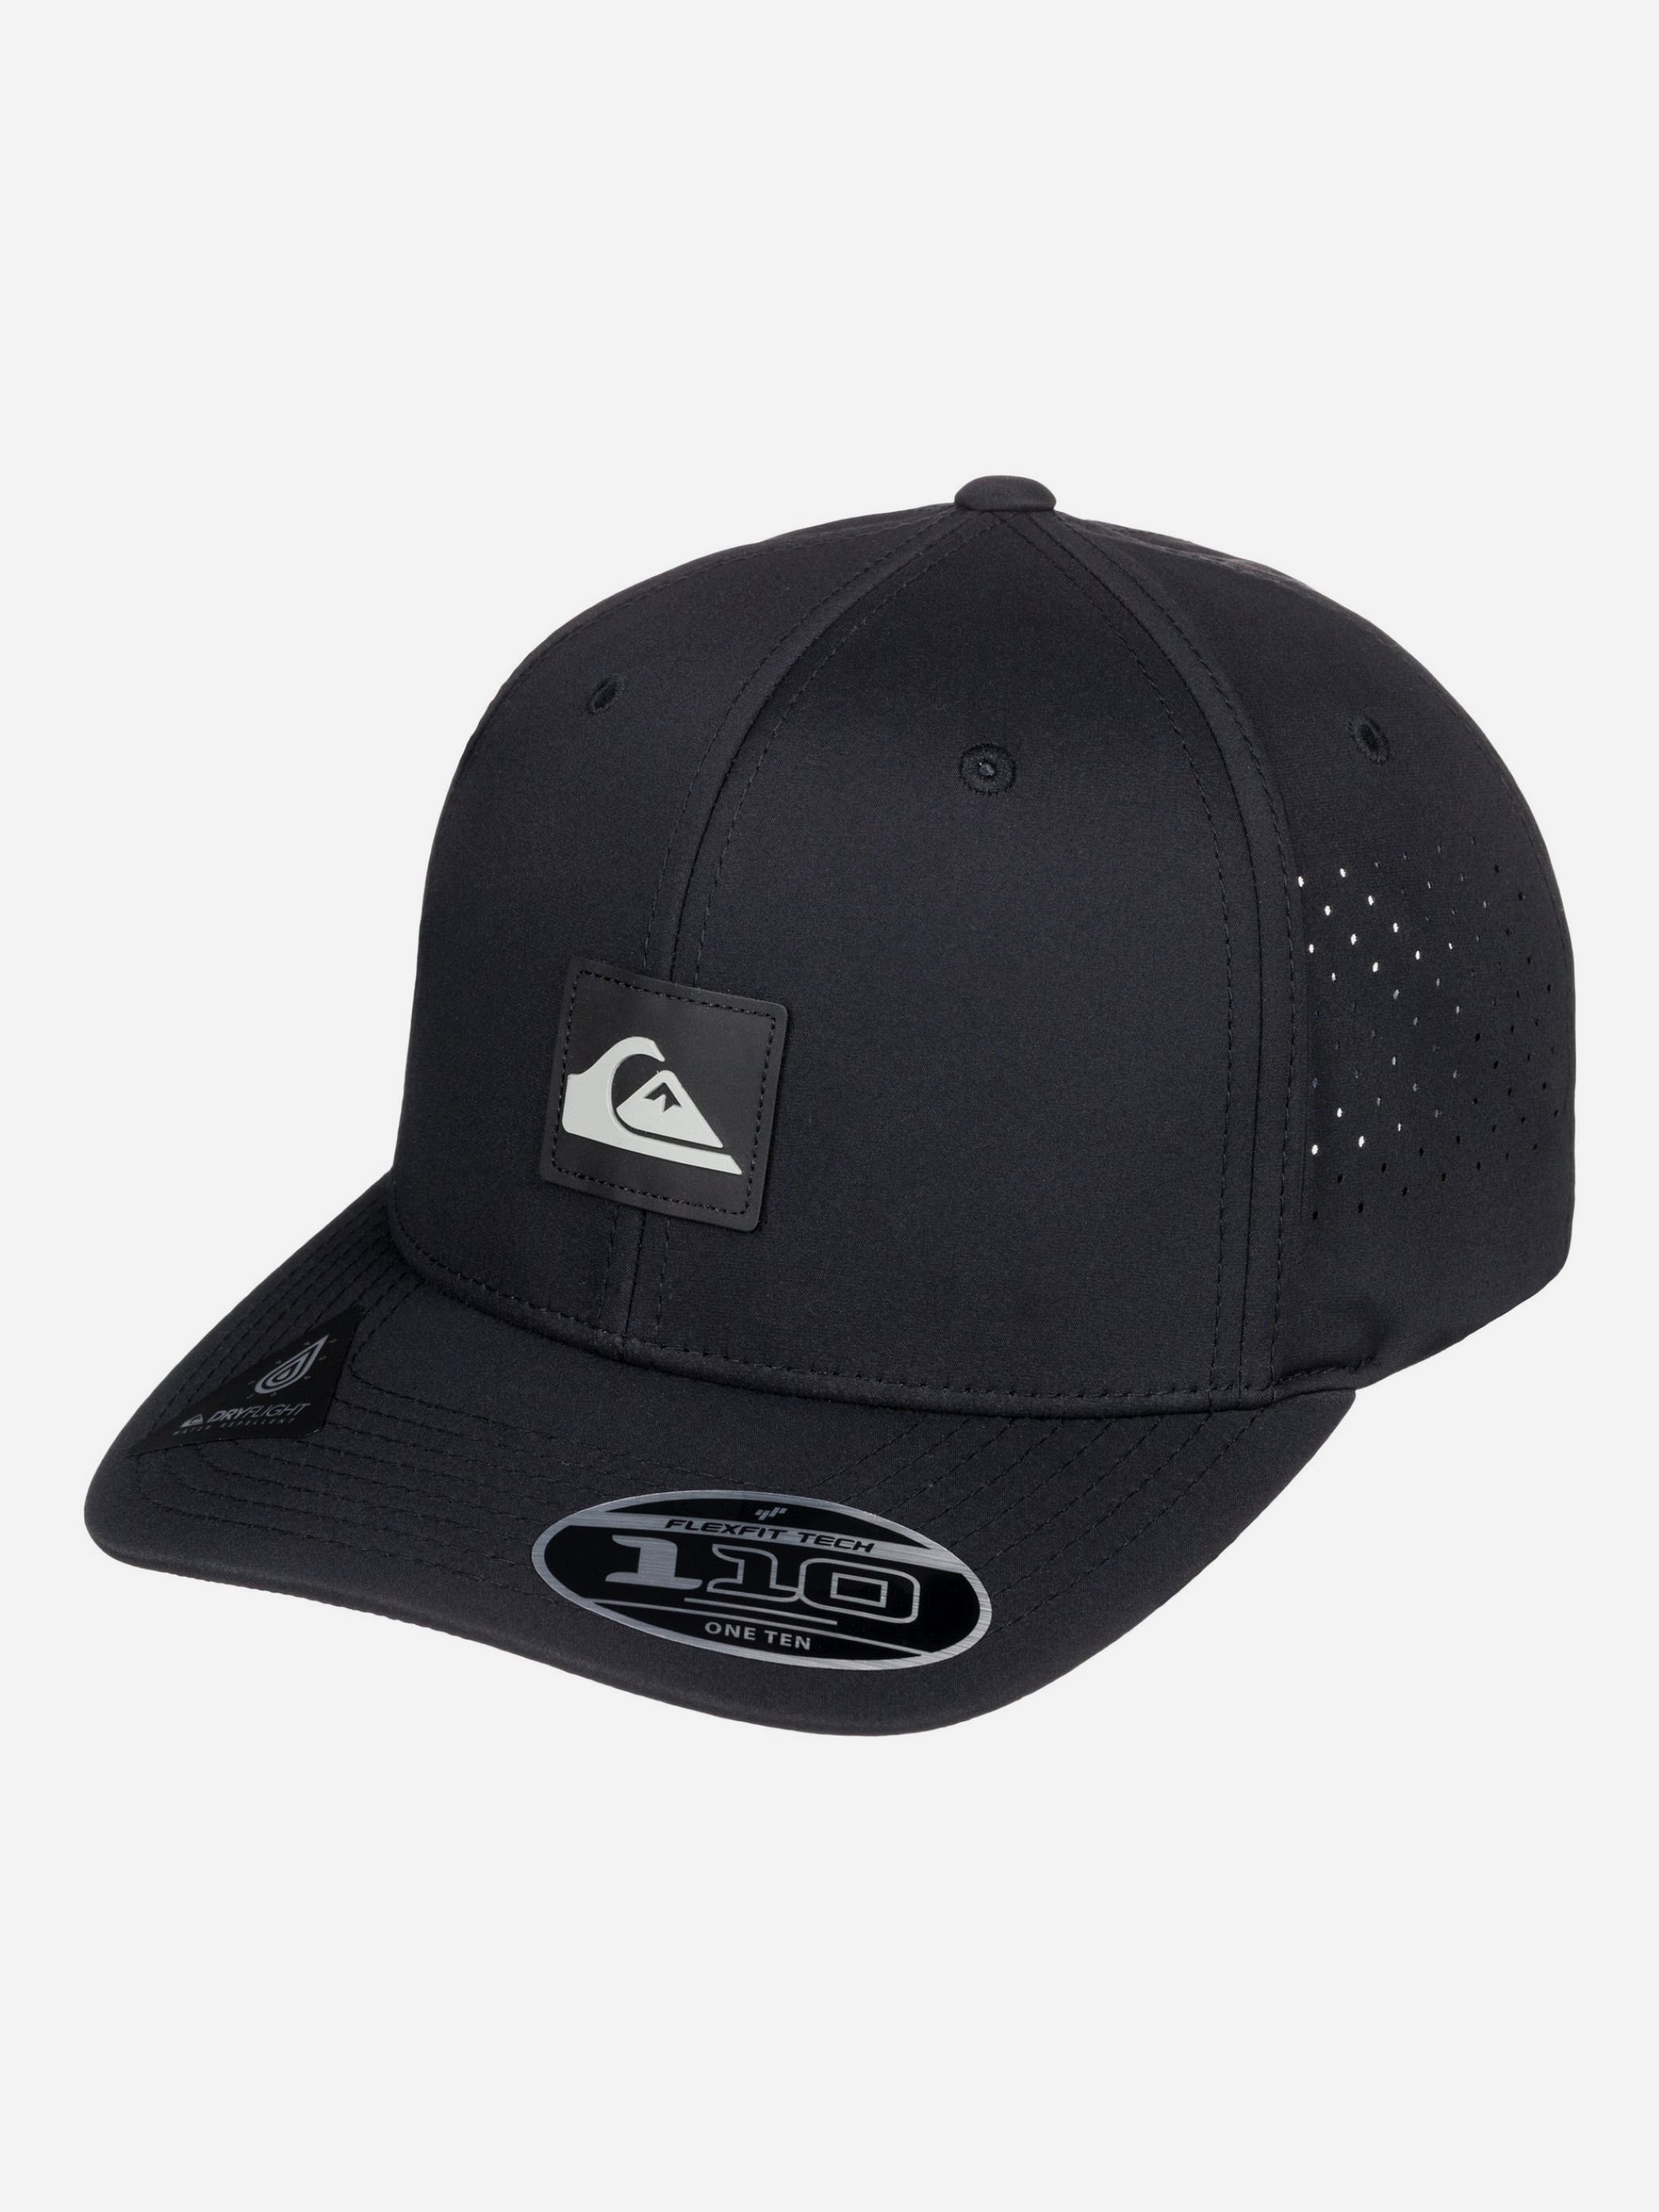 Lengthen Objector Adviser שחור - כובע מצחייה עם לוגו / גברים - QUIKSILVER - TERMINAL X